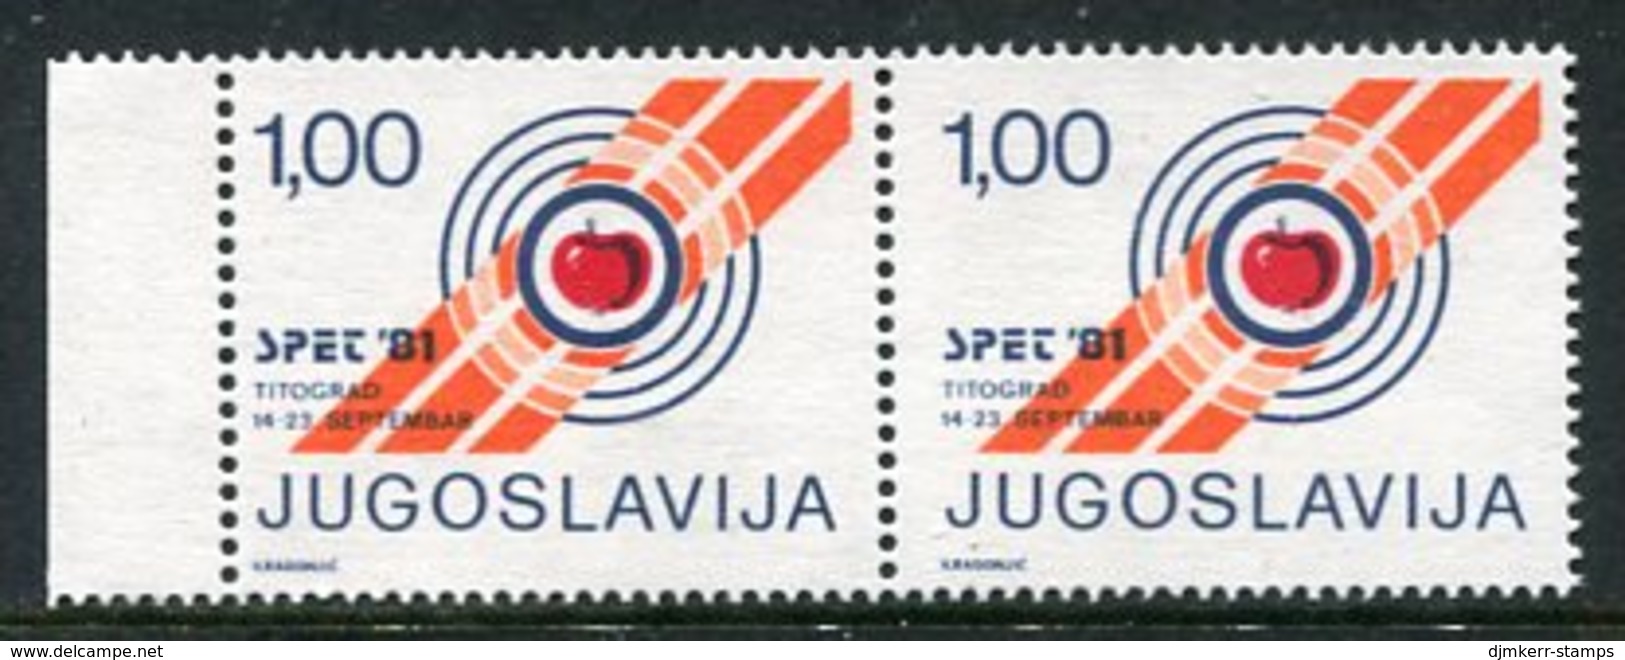 YUGOSLAVIA 1981 SPET '81 European Shooting Championship Tax Stamp, Marginal Pair With Variety MNH / ** - Bienfaisance